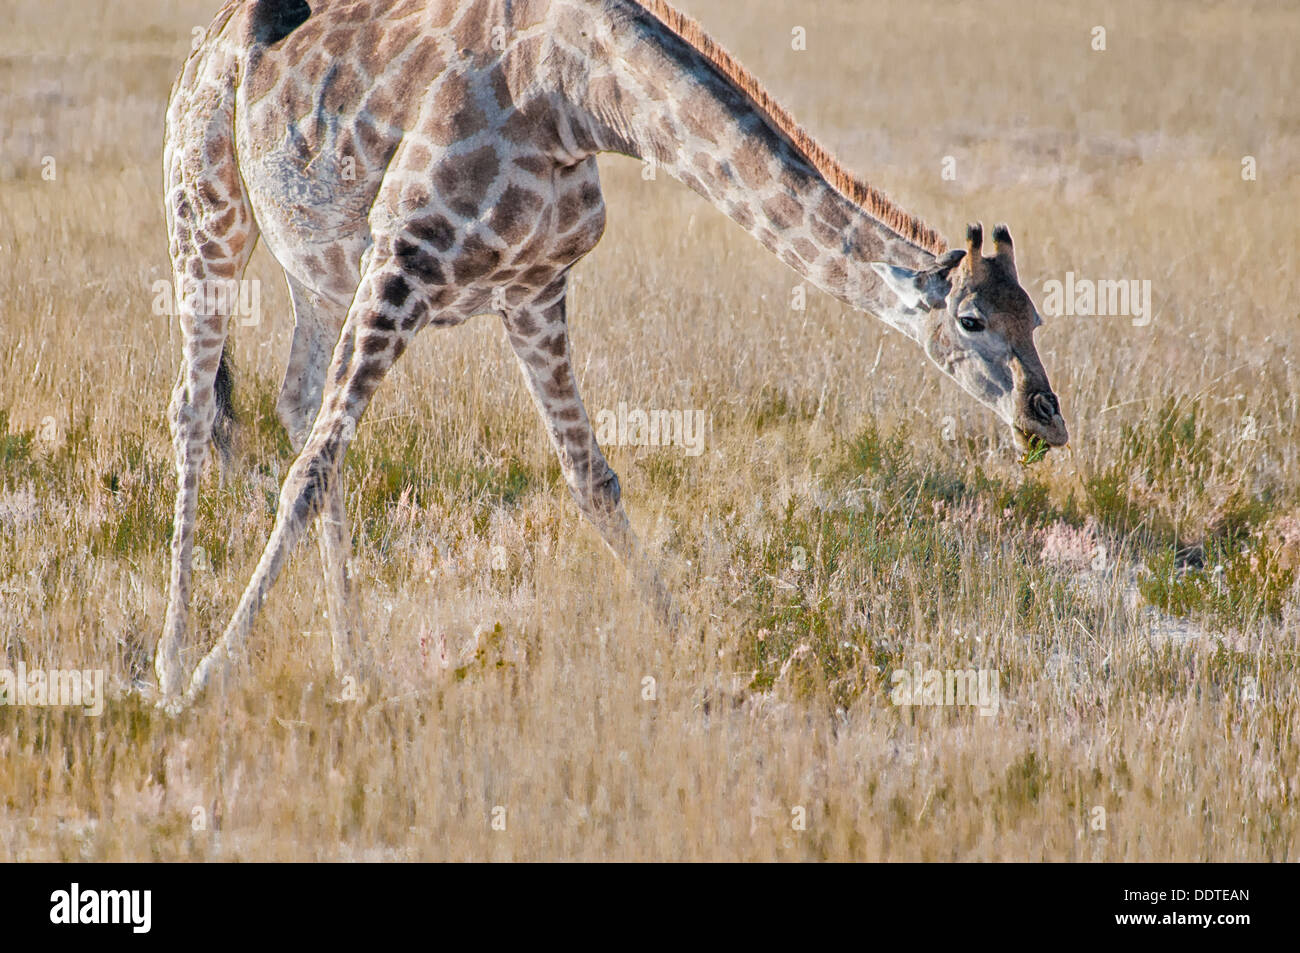 Pregnant Giraffe, Giraffa camelopardalis, leaning down to eat in Etosha National Park, Namibia, Africa Stock Photo